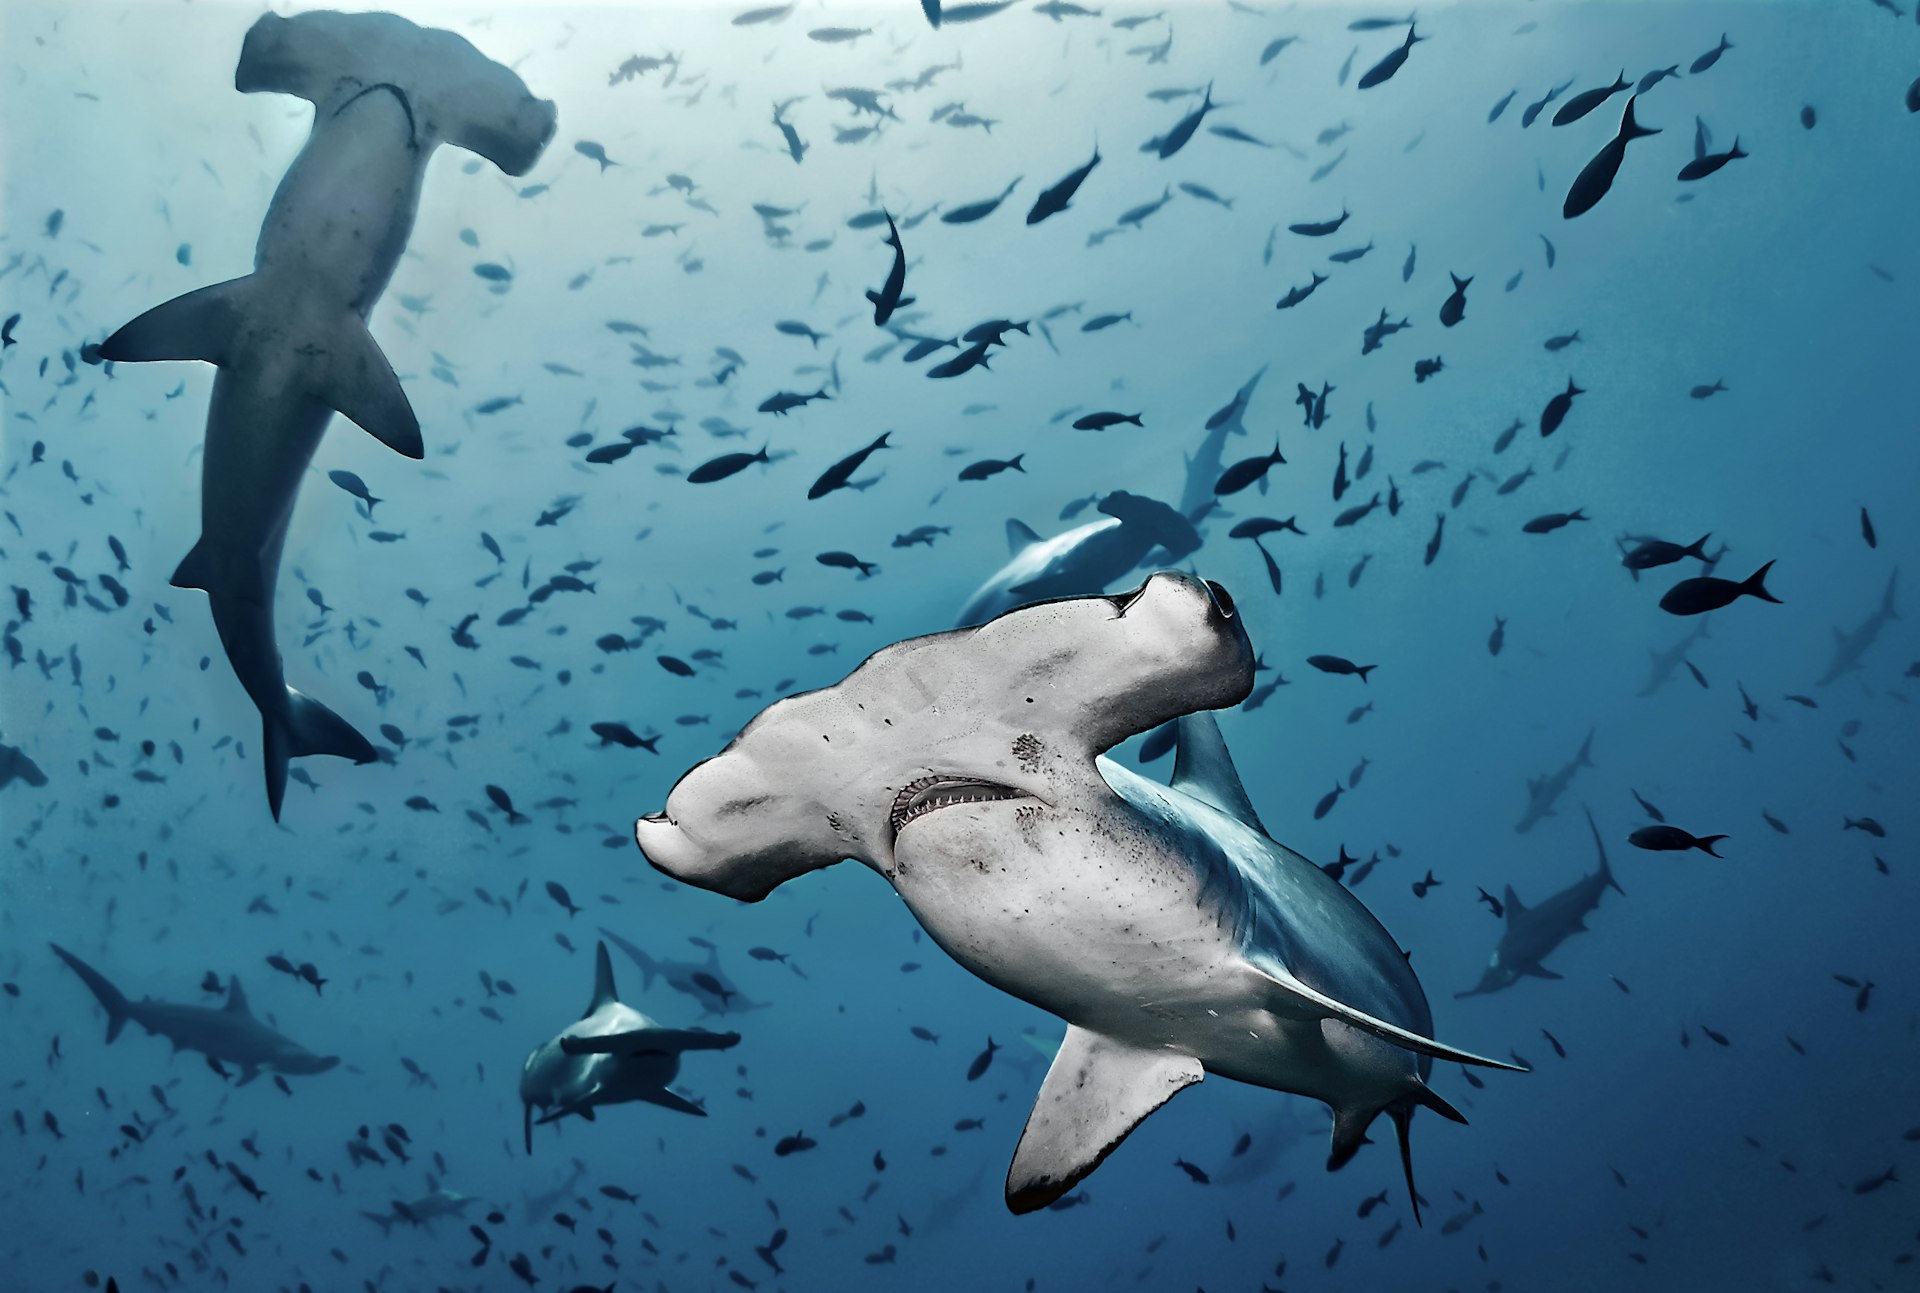 A school of hammerhead sharks shot underwater off of Parque Nacional Isla del Coco, Costa Rica, Central America